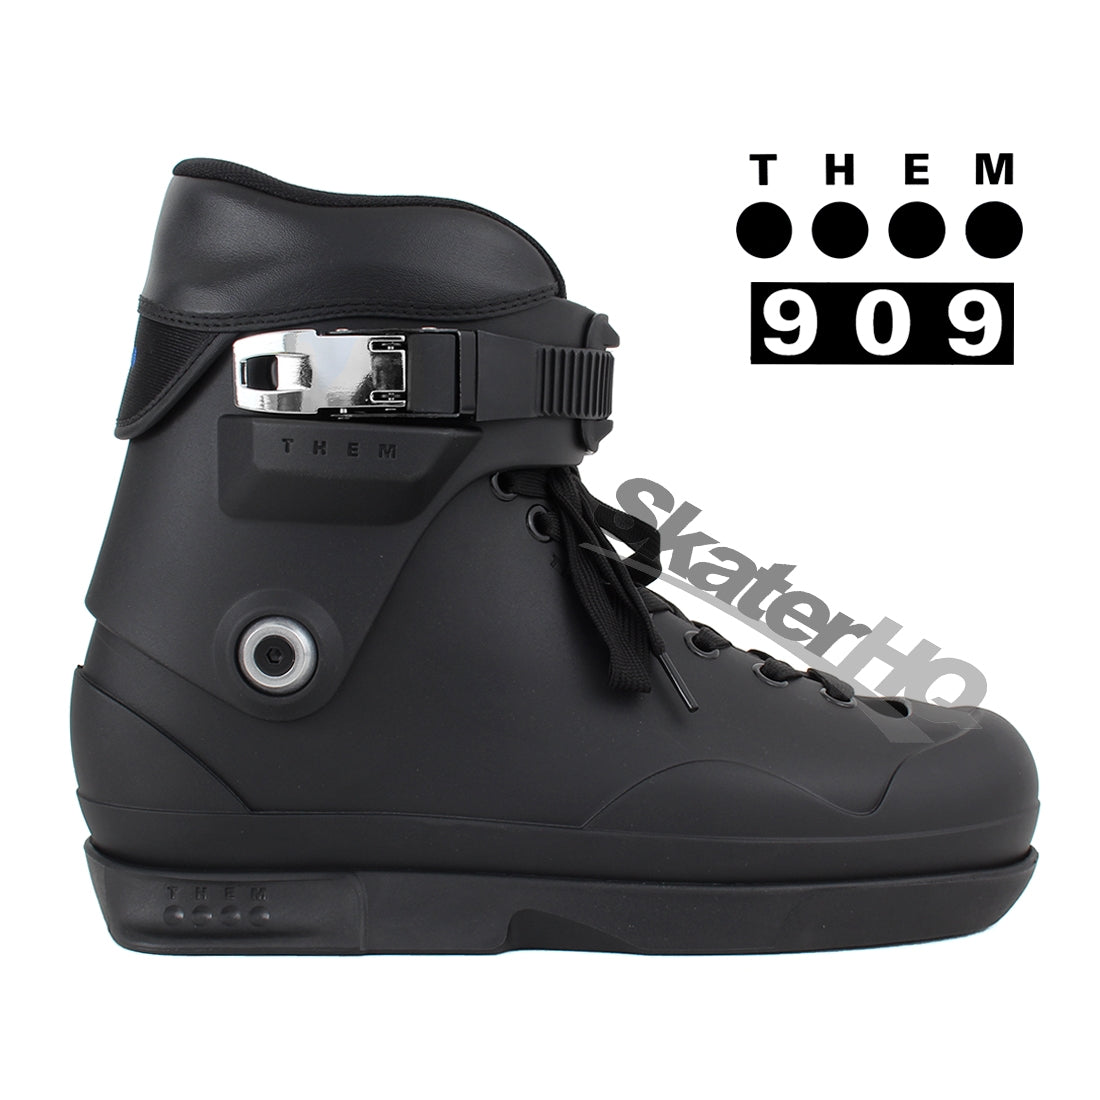 THEM 909 Boot Black 9-10US Inline Aggressive Skates